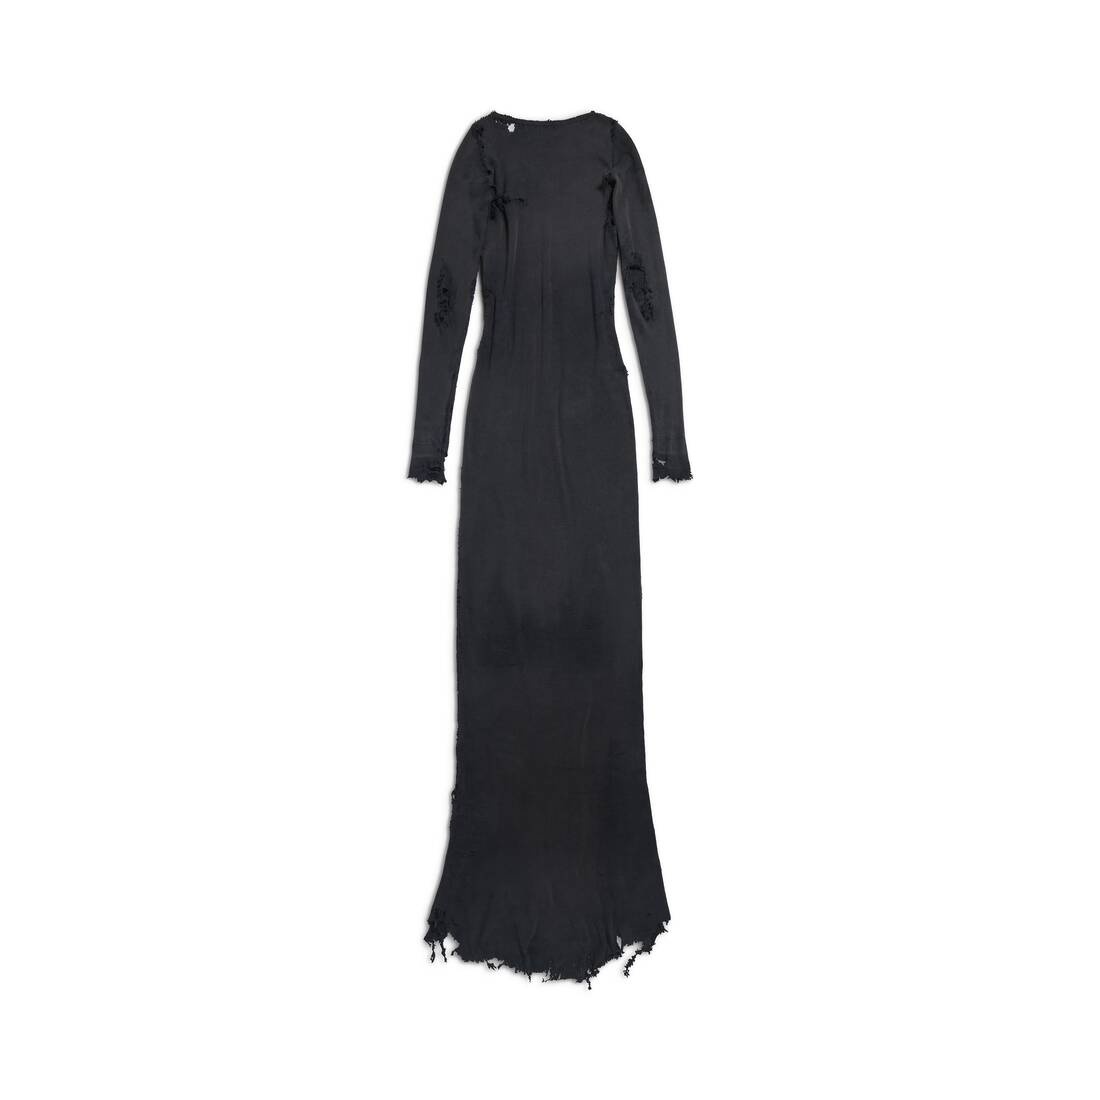 Women's Lingerie Maxi Dress in Black - 7